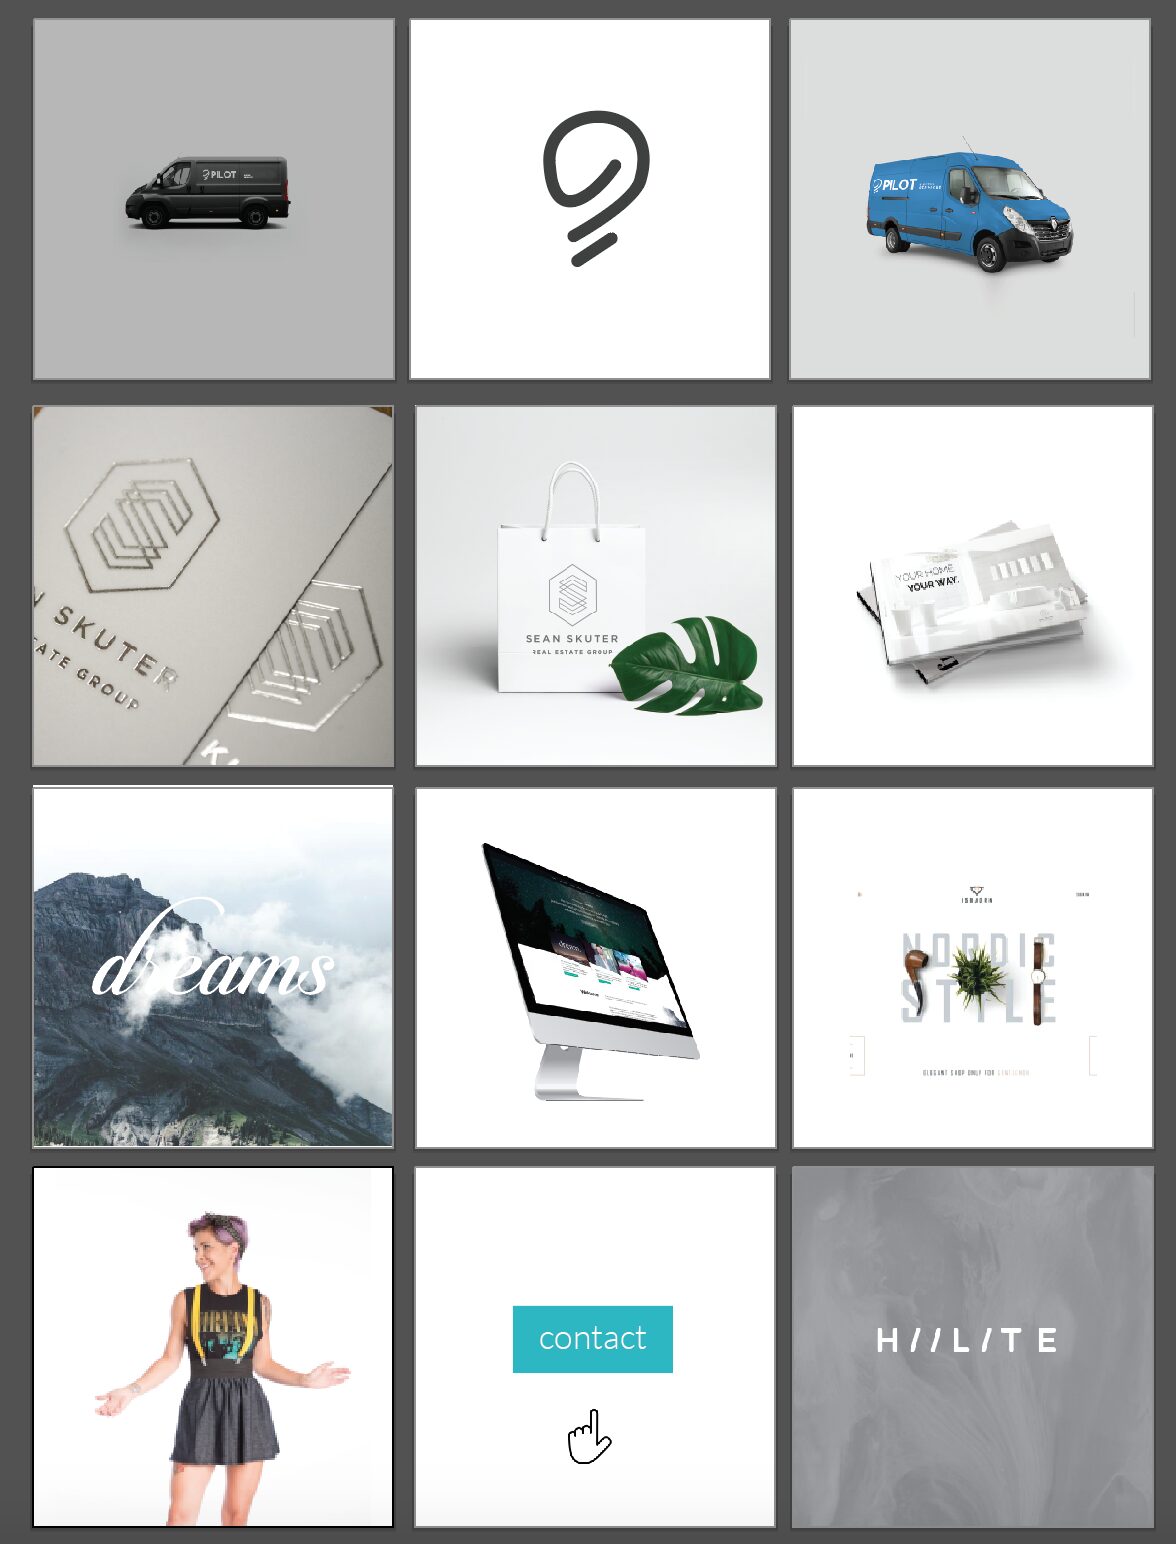 hiilite-web-design-marketing-seo-effective-instagram